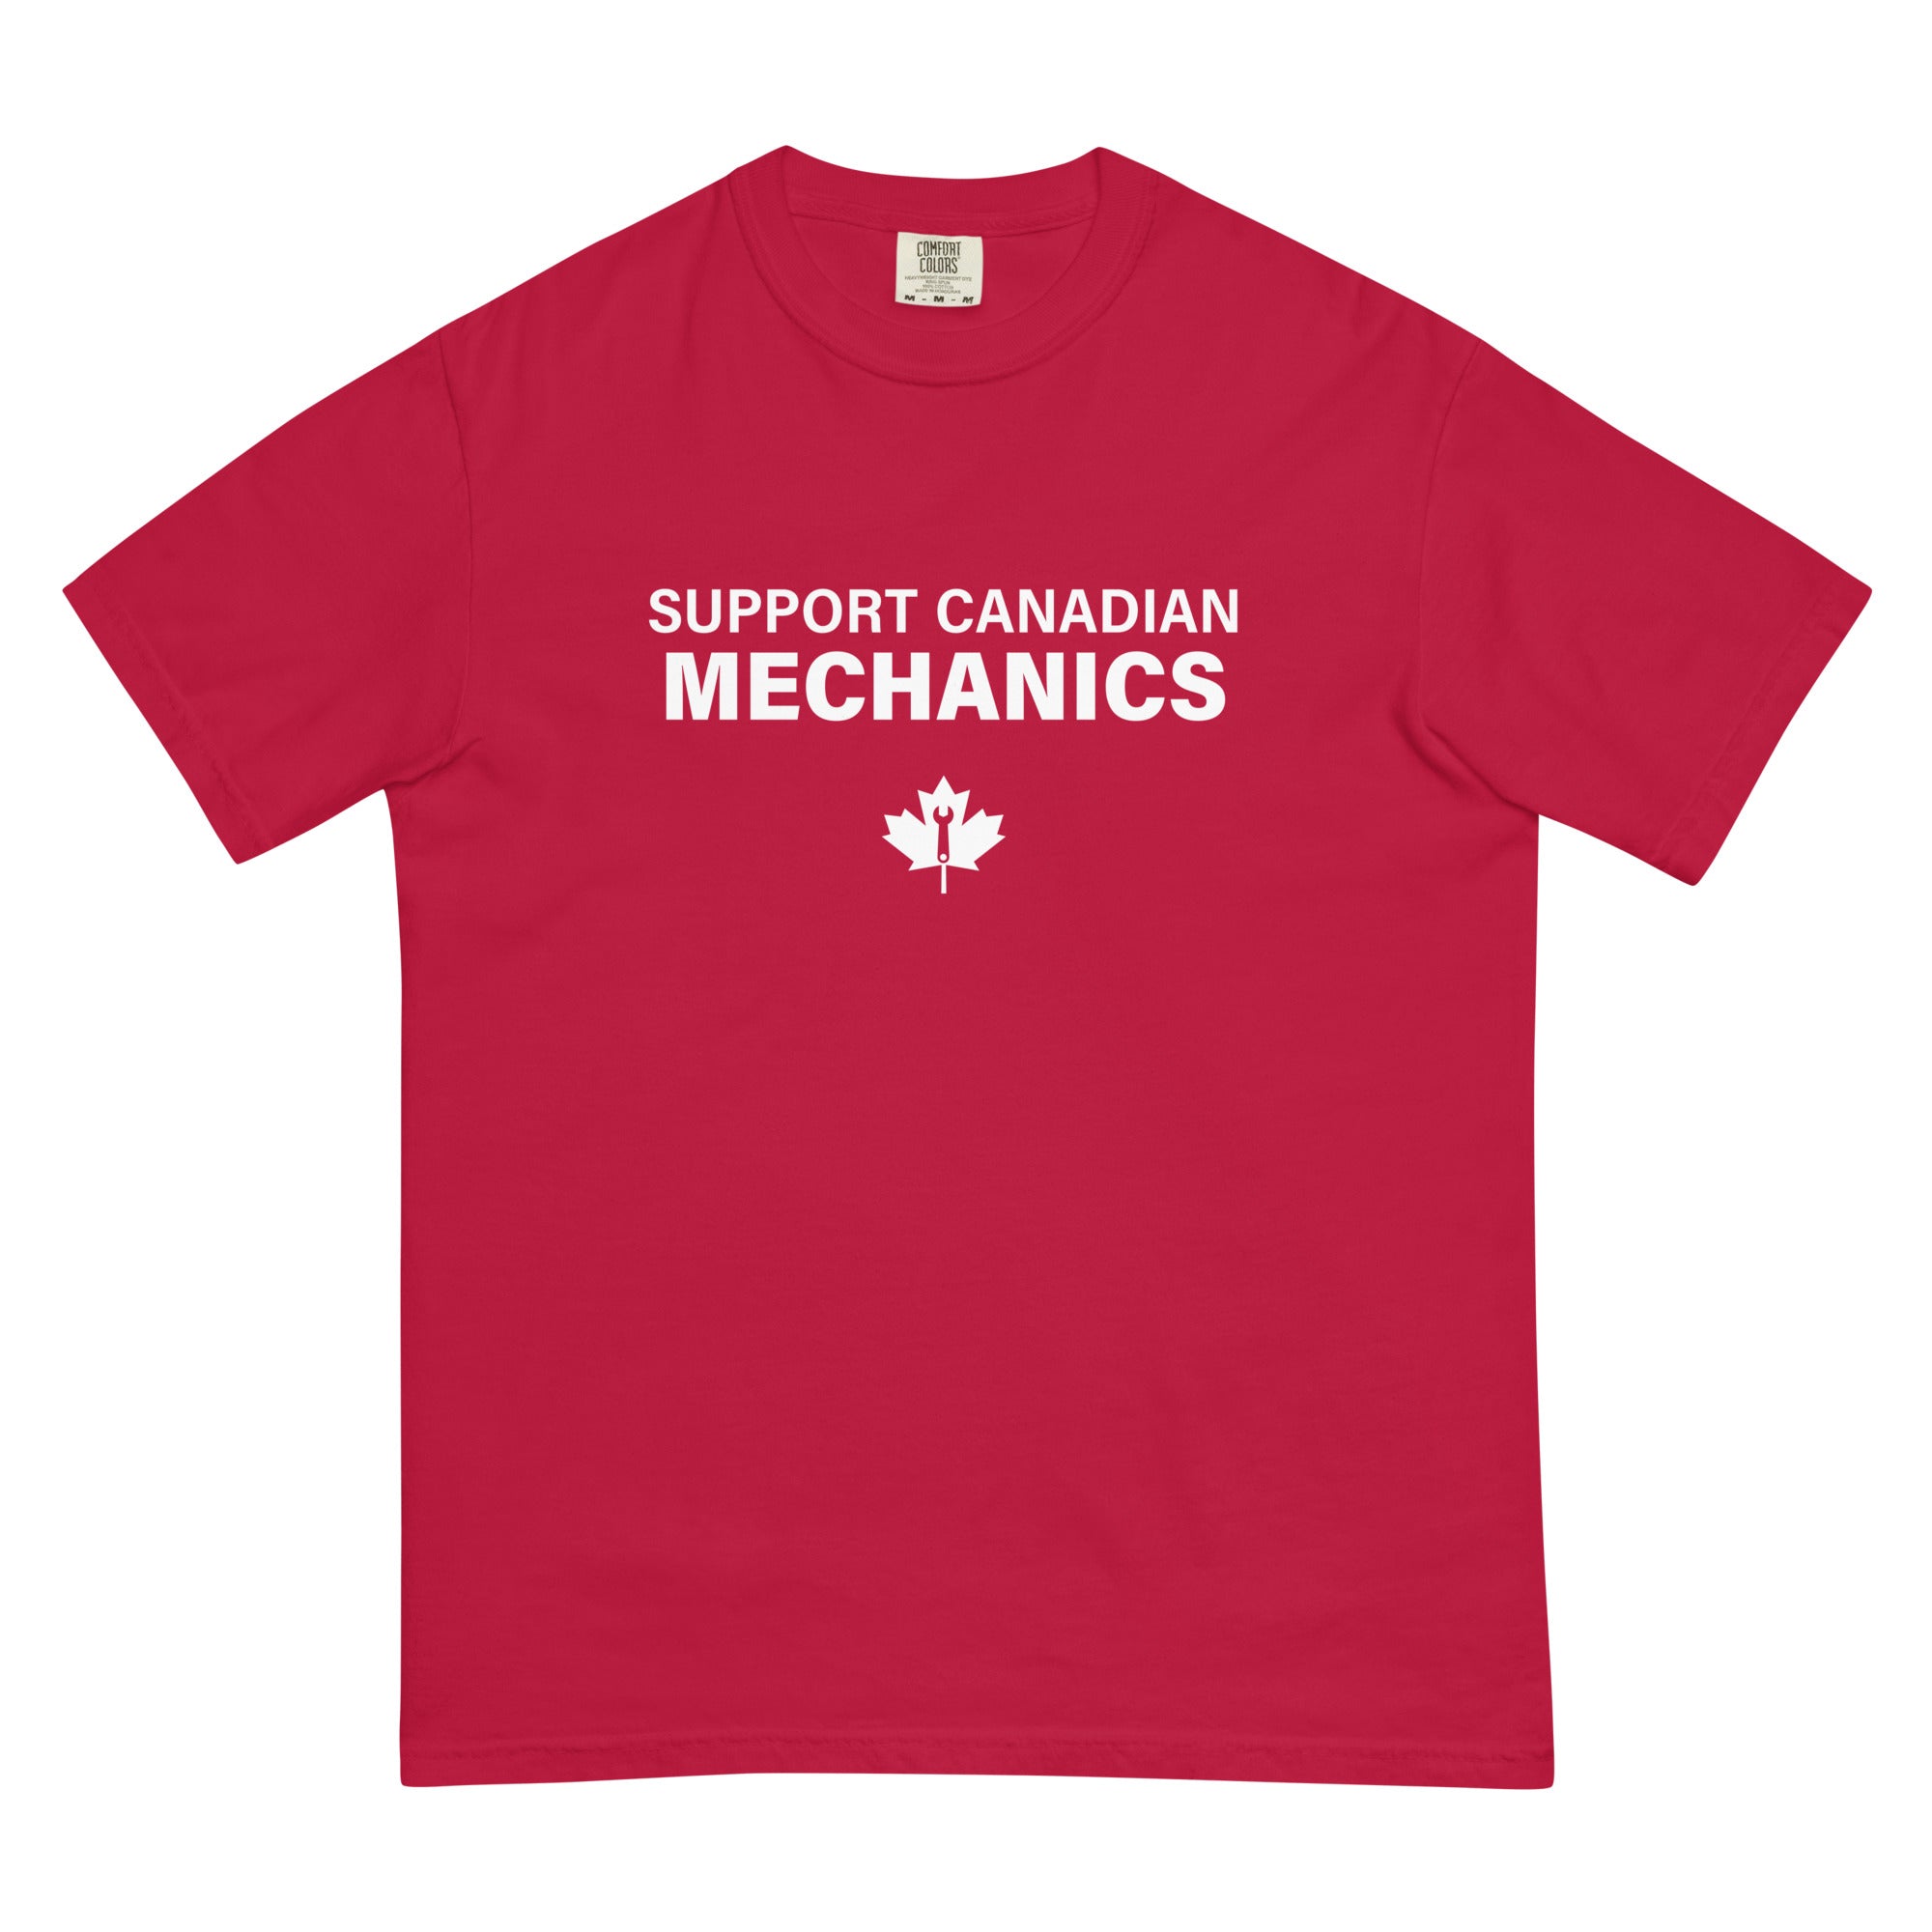 Men's "Support Canadian Mechanics" T-shirt